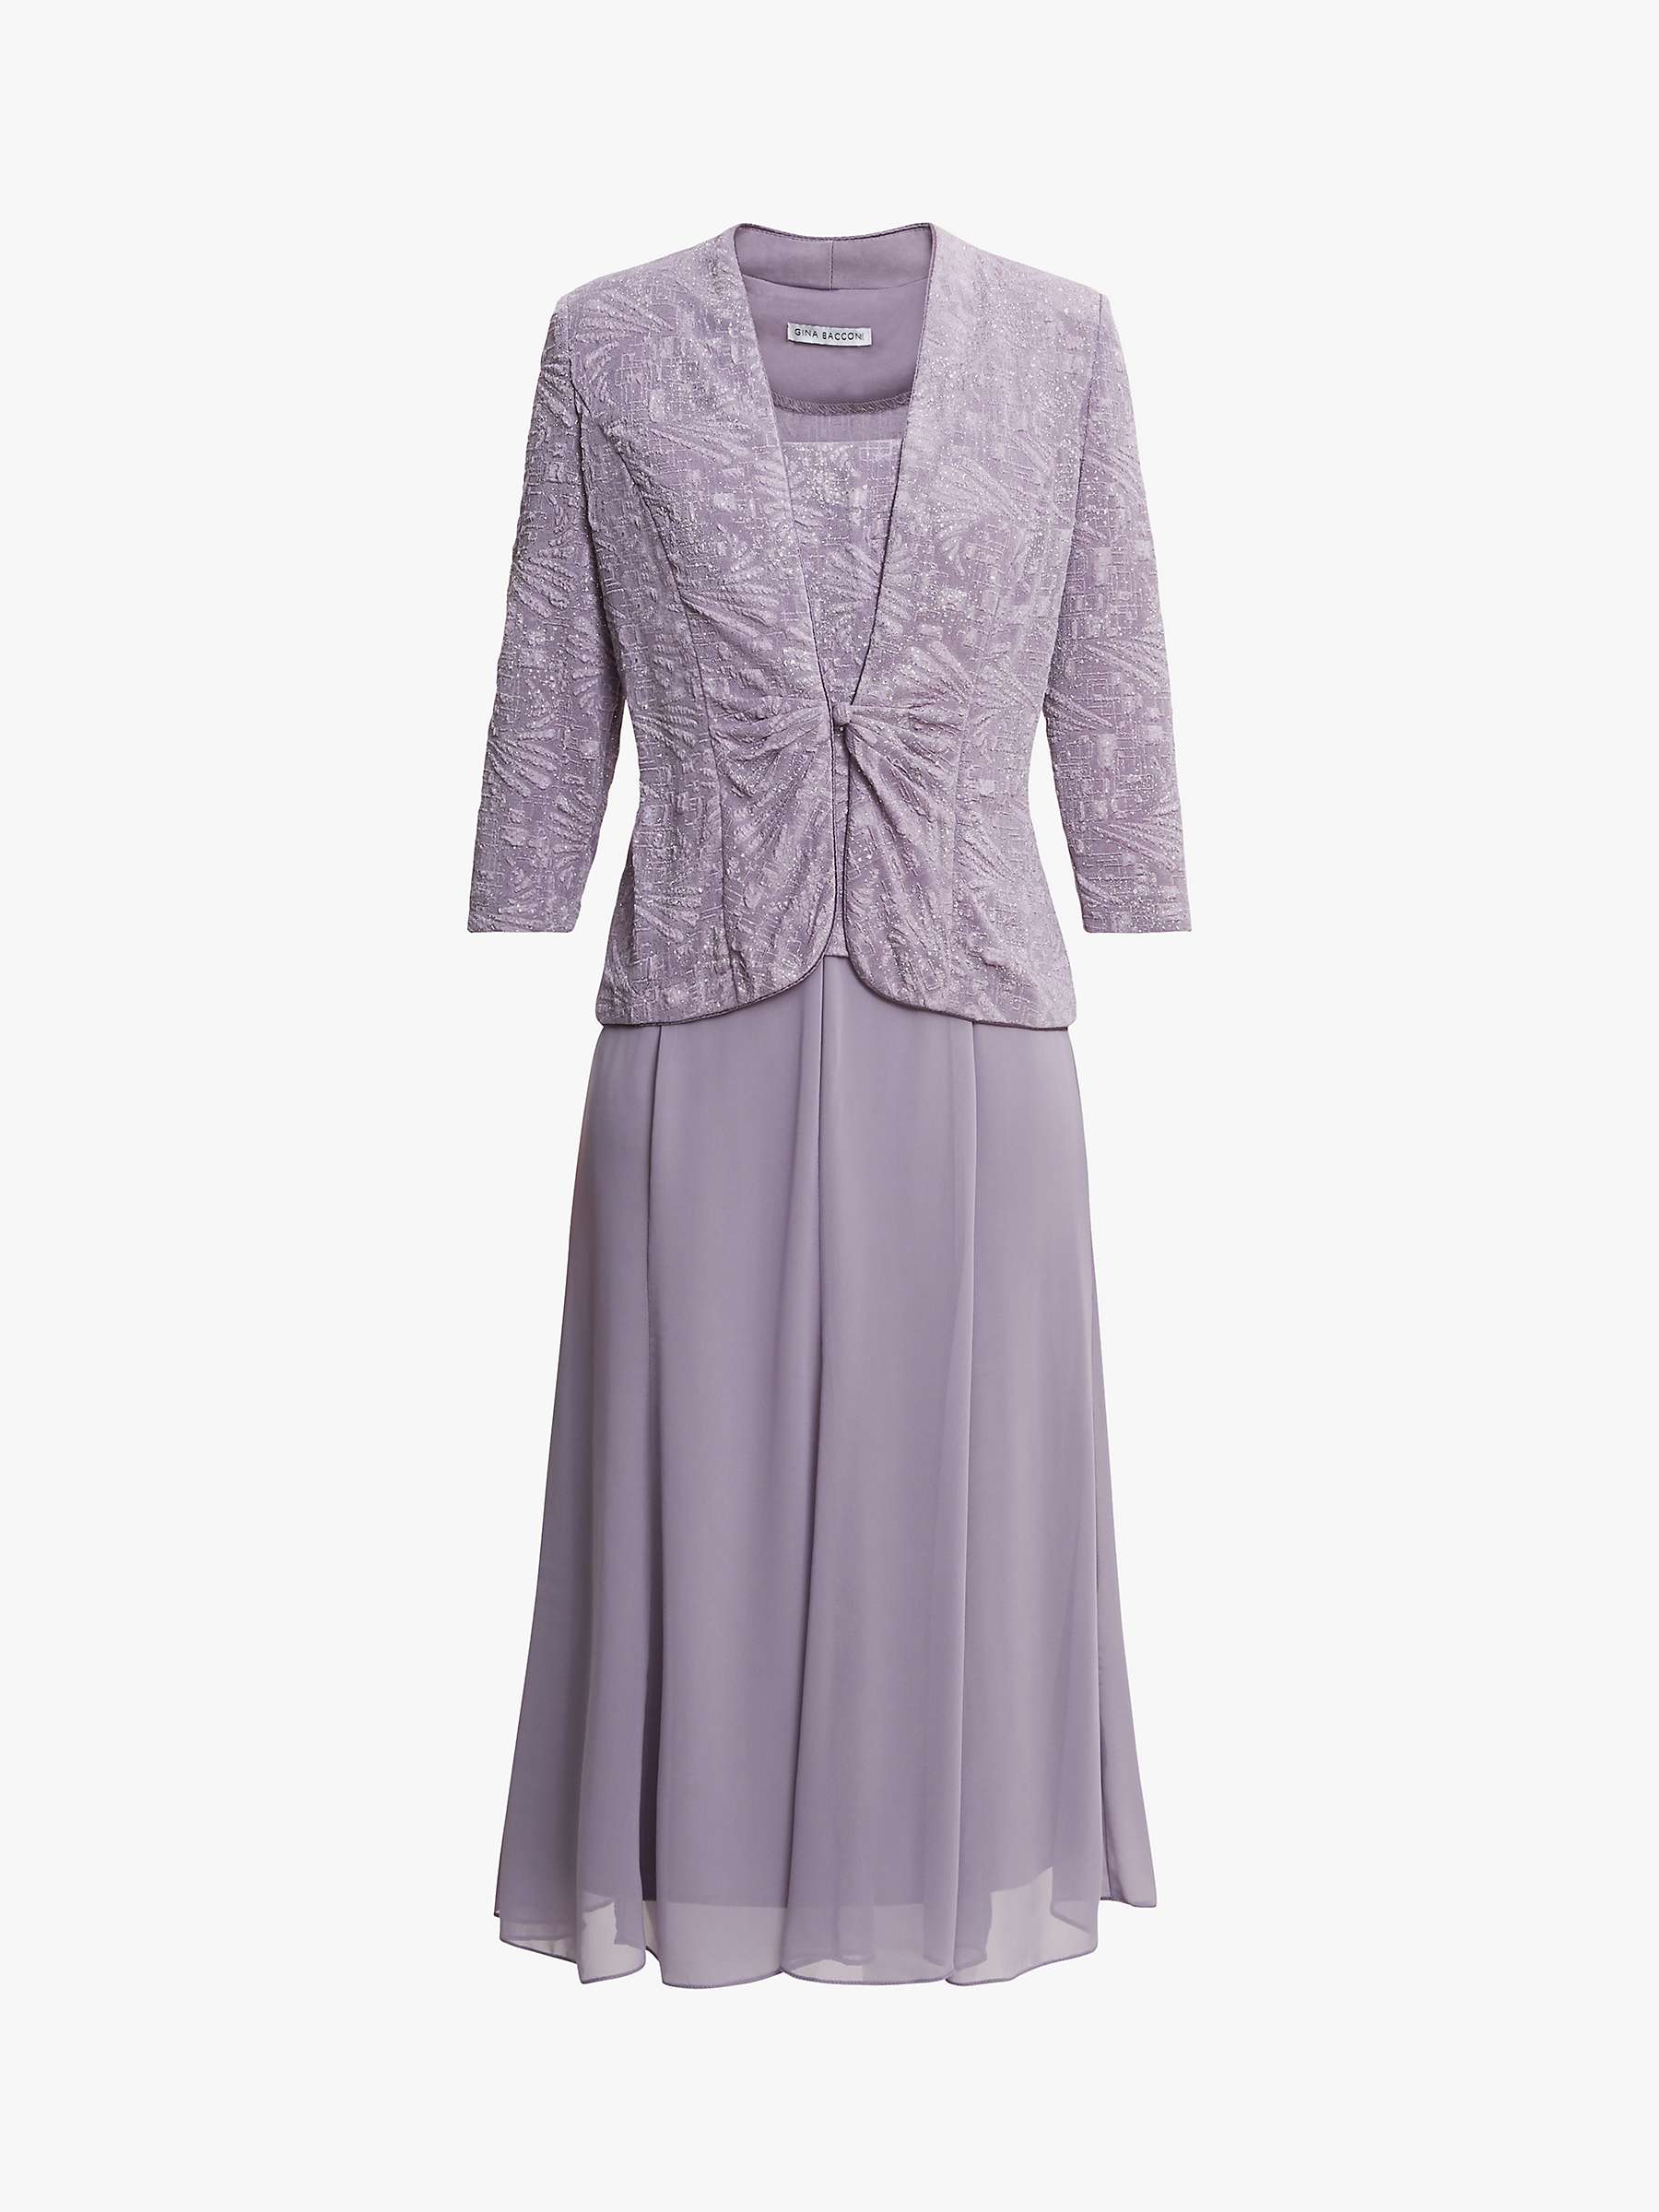 Buy Gina Bacconi Tillie Glitter Knit Tank Midi Dress Online at johnlewis.com